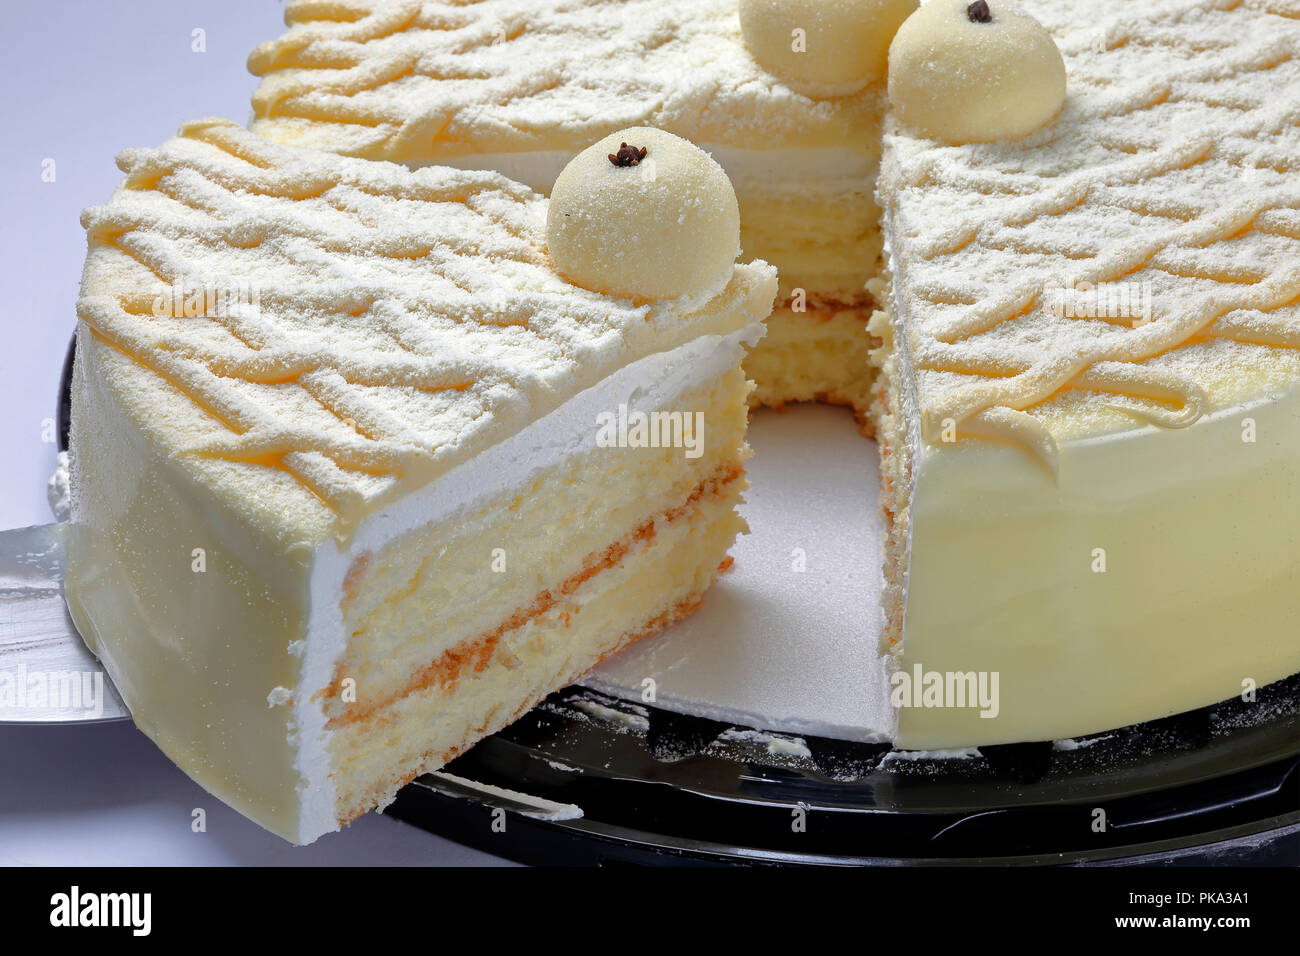 Cake with milk powder coating Stock Photo - Alamy